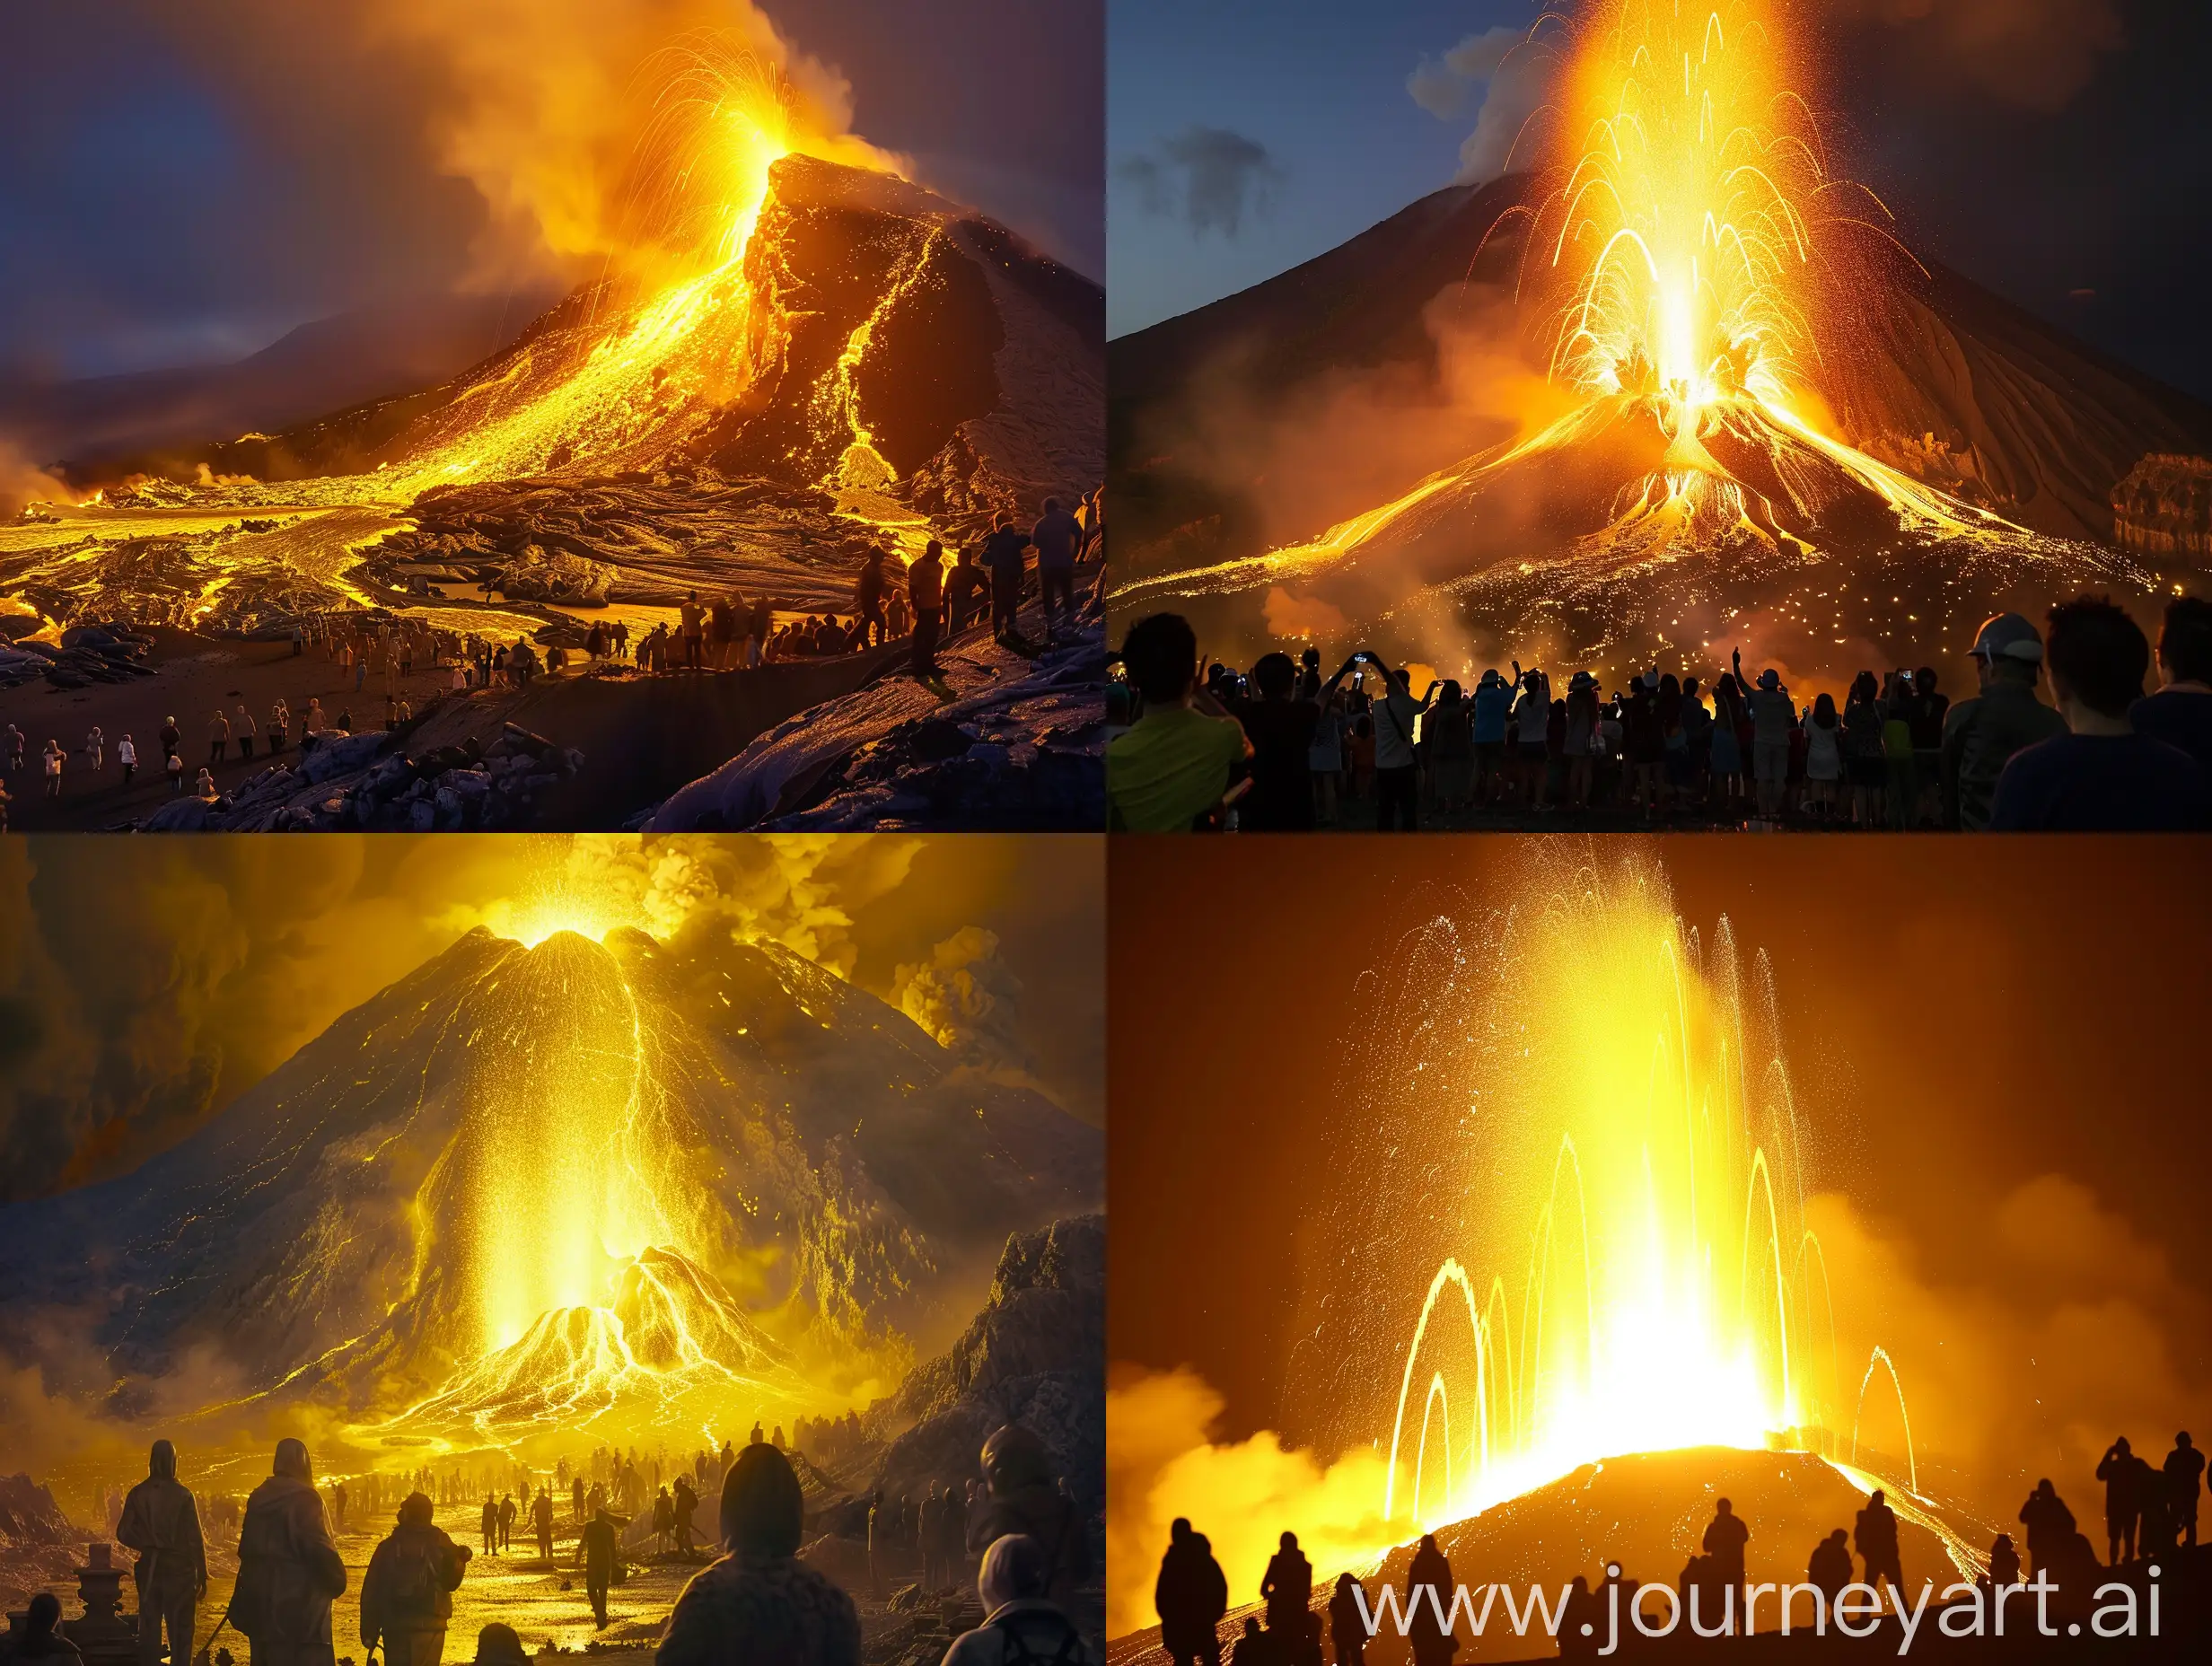 Golden-Eruption-Spectacular-Volcanic-Display-in-HighDefinition-8K